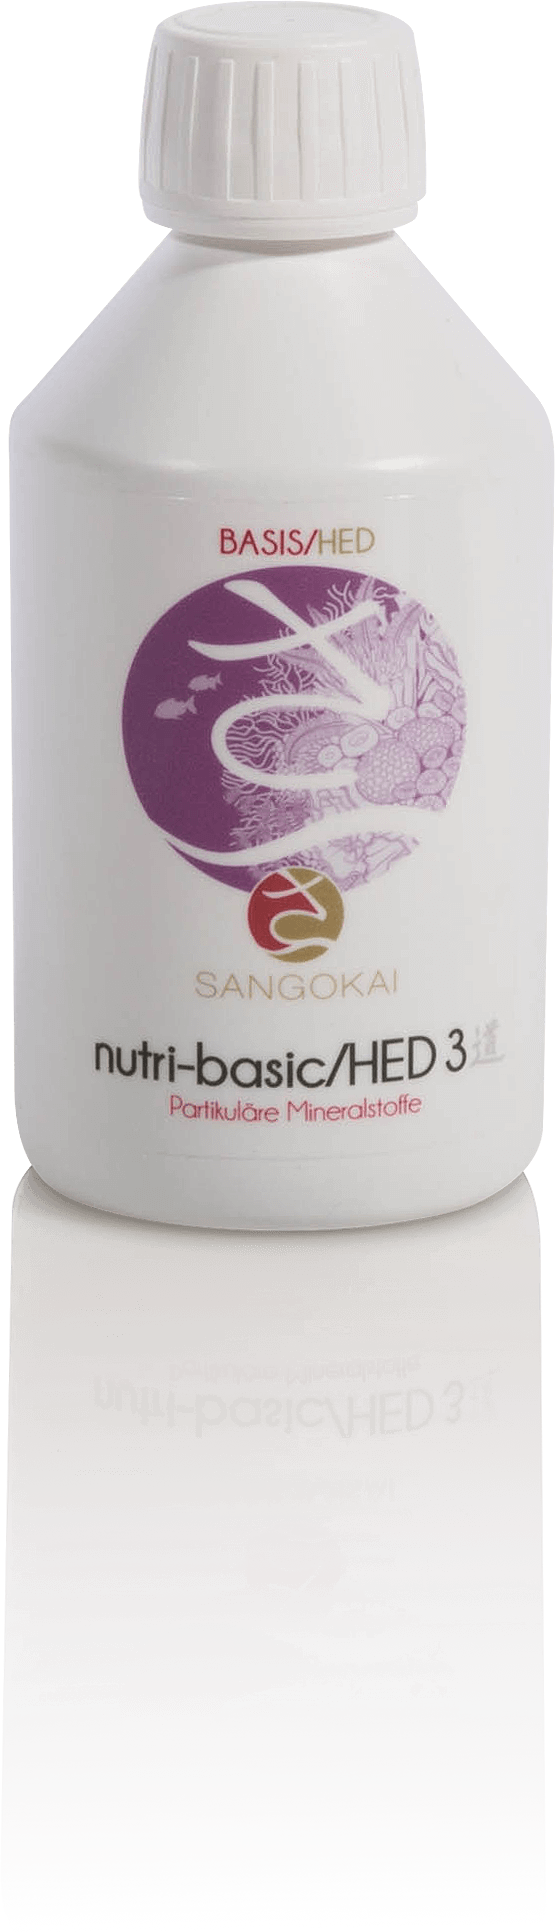 Sango nutri-basic/ HED  # 3  500 ml